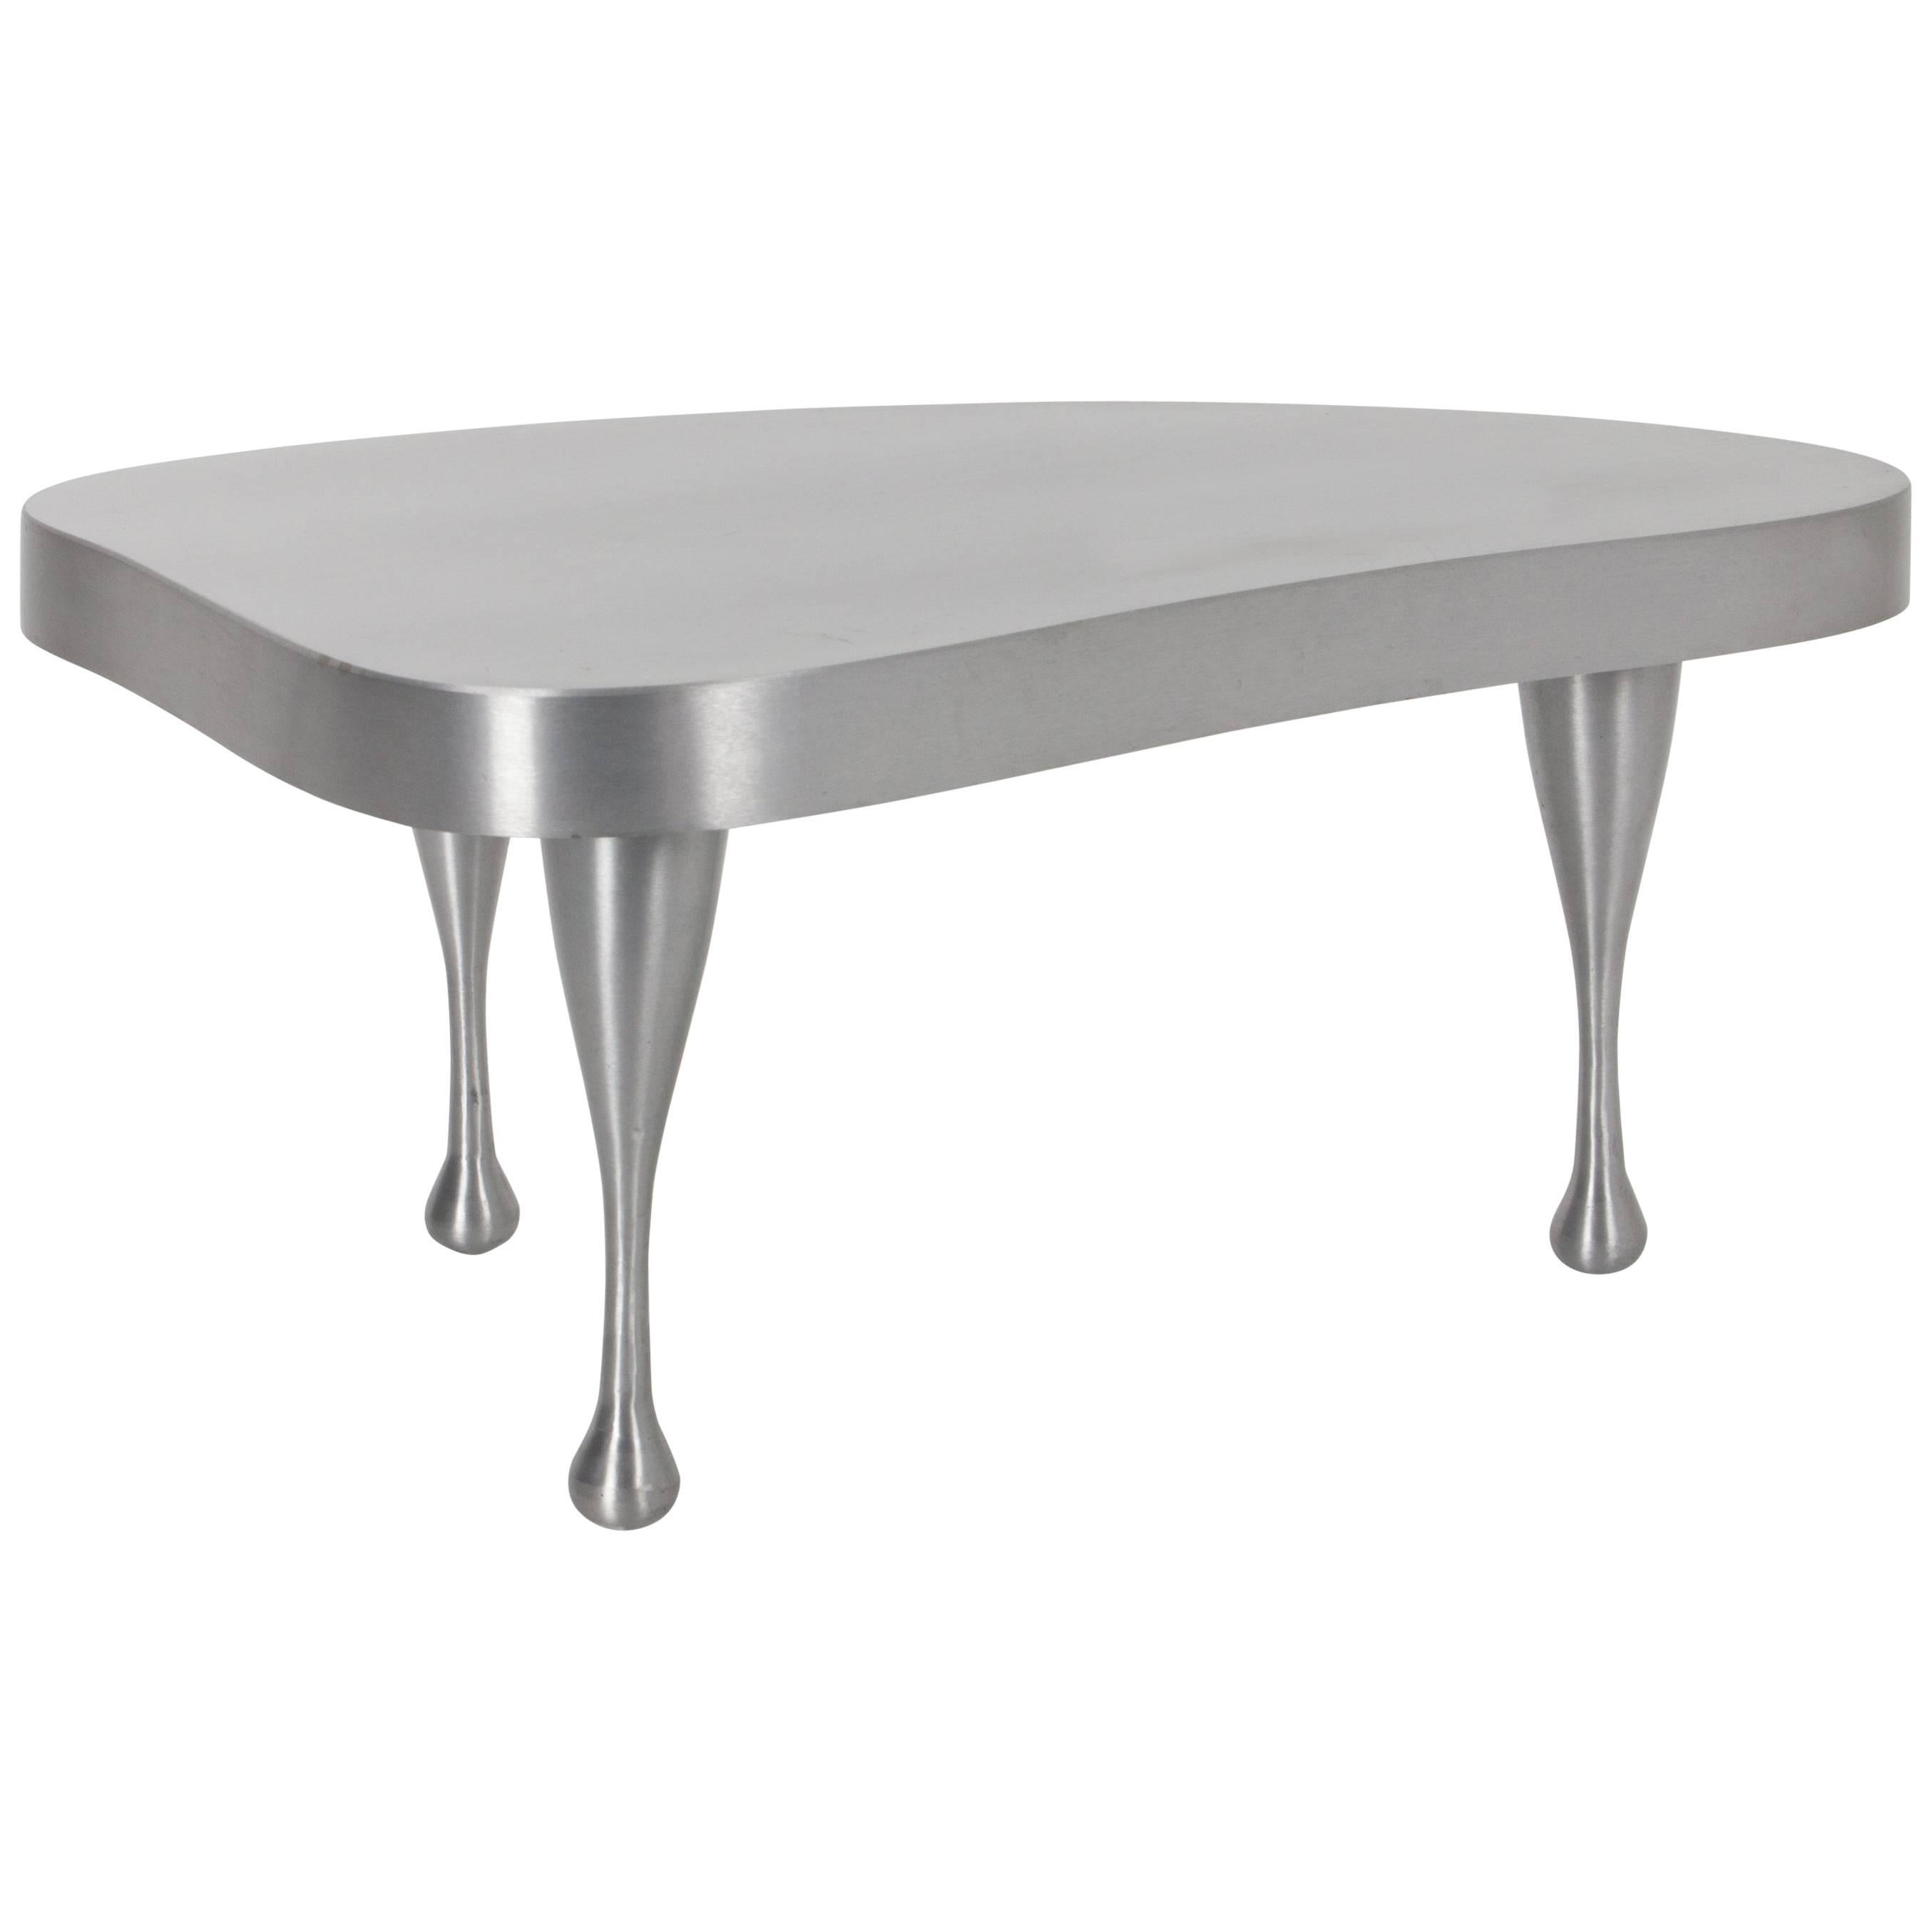 Frederick Kiesler Cast-Aluminium Table For Sale